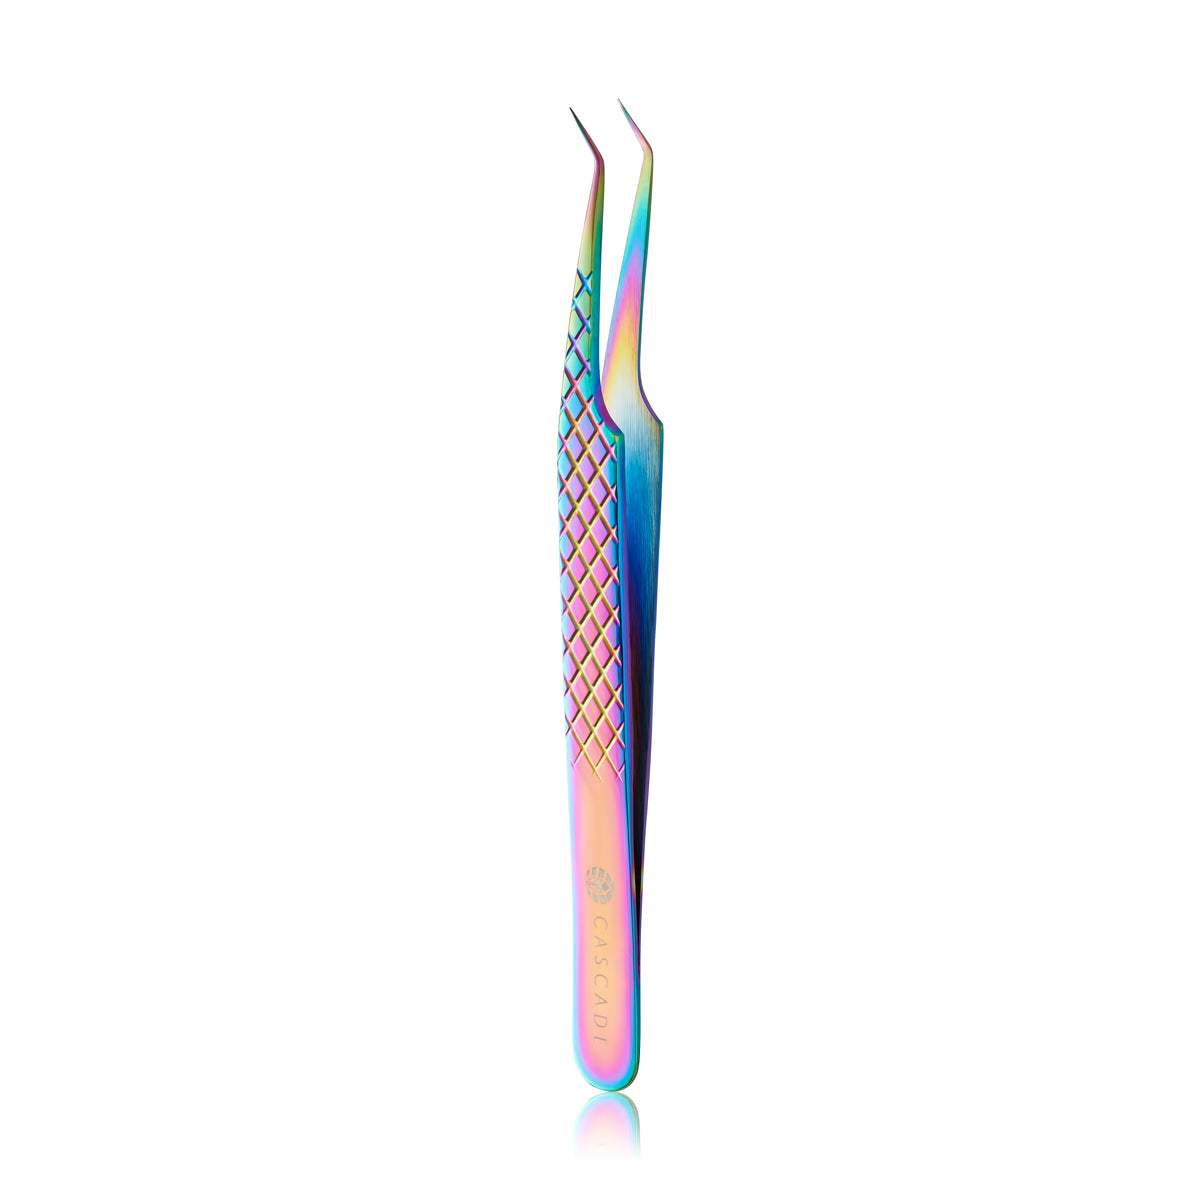 45 Degree Angle 8mm/“Needle-style” Volume Tweezer